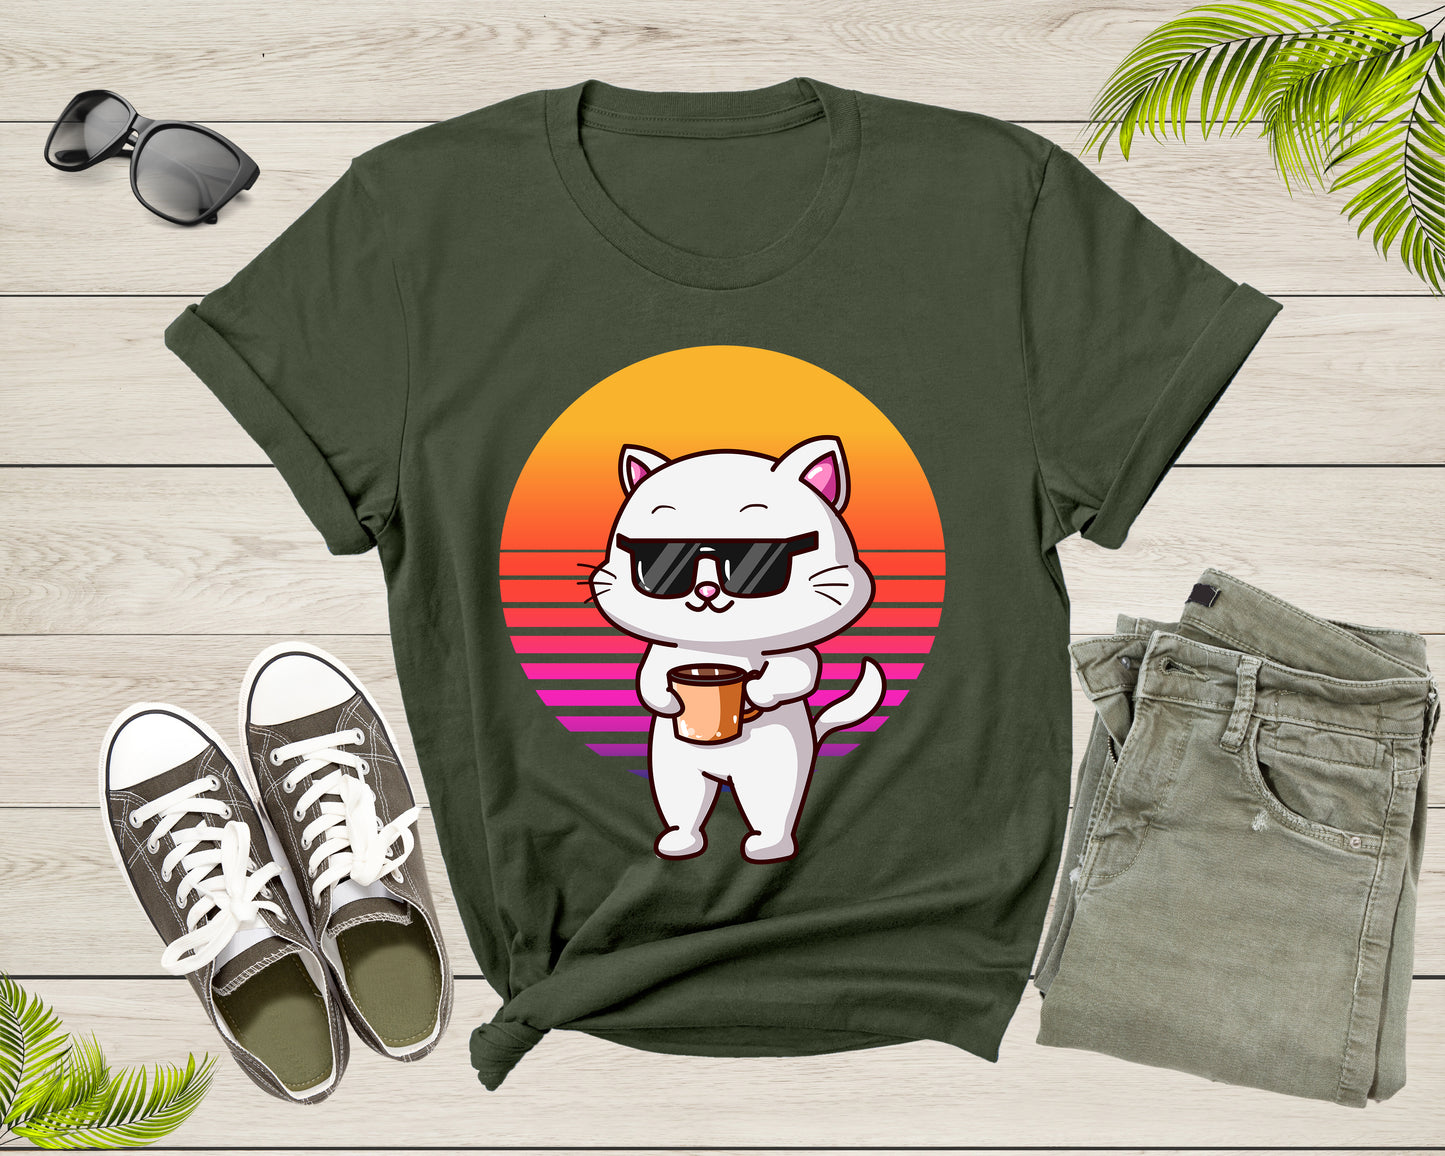 Cool Cat Kitten Kitty Animal with Sunglasses Holds Coffee T-Shirt Retro Cat Kitten Shirt for Men Women Kids Boys Girls Teens Graphic Tshirt